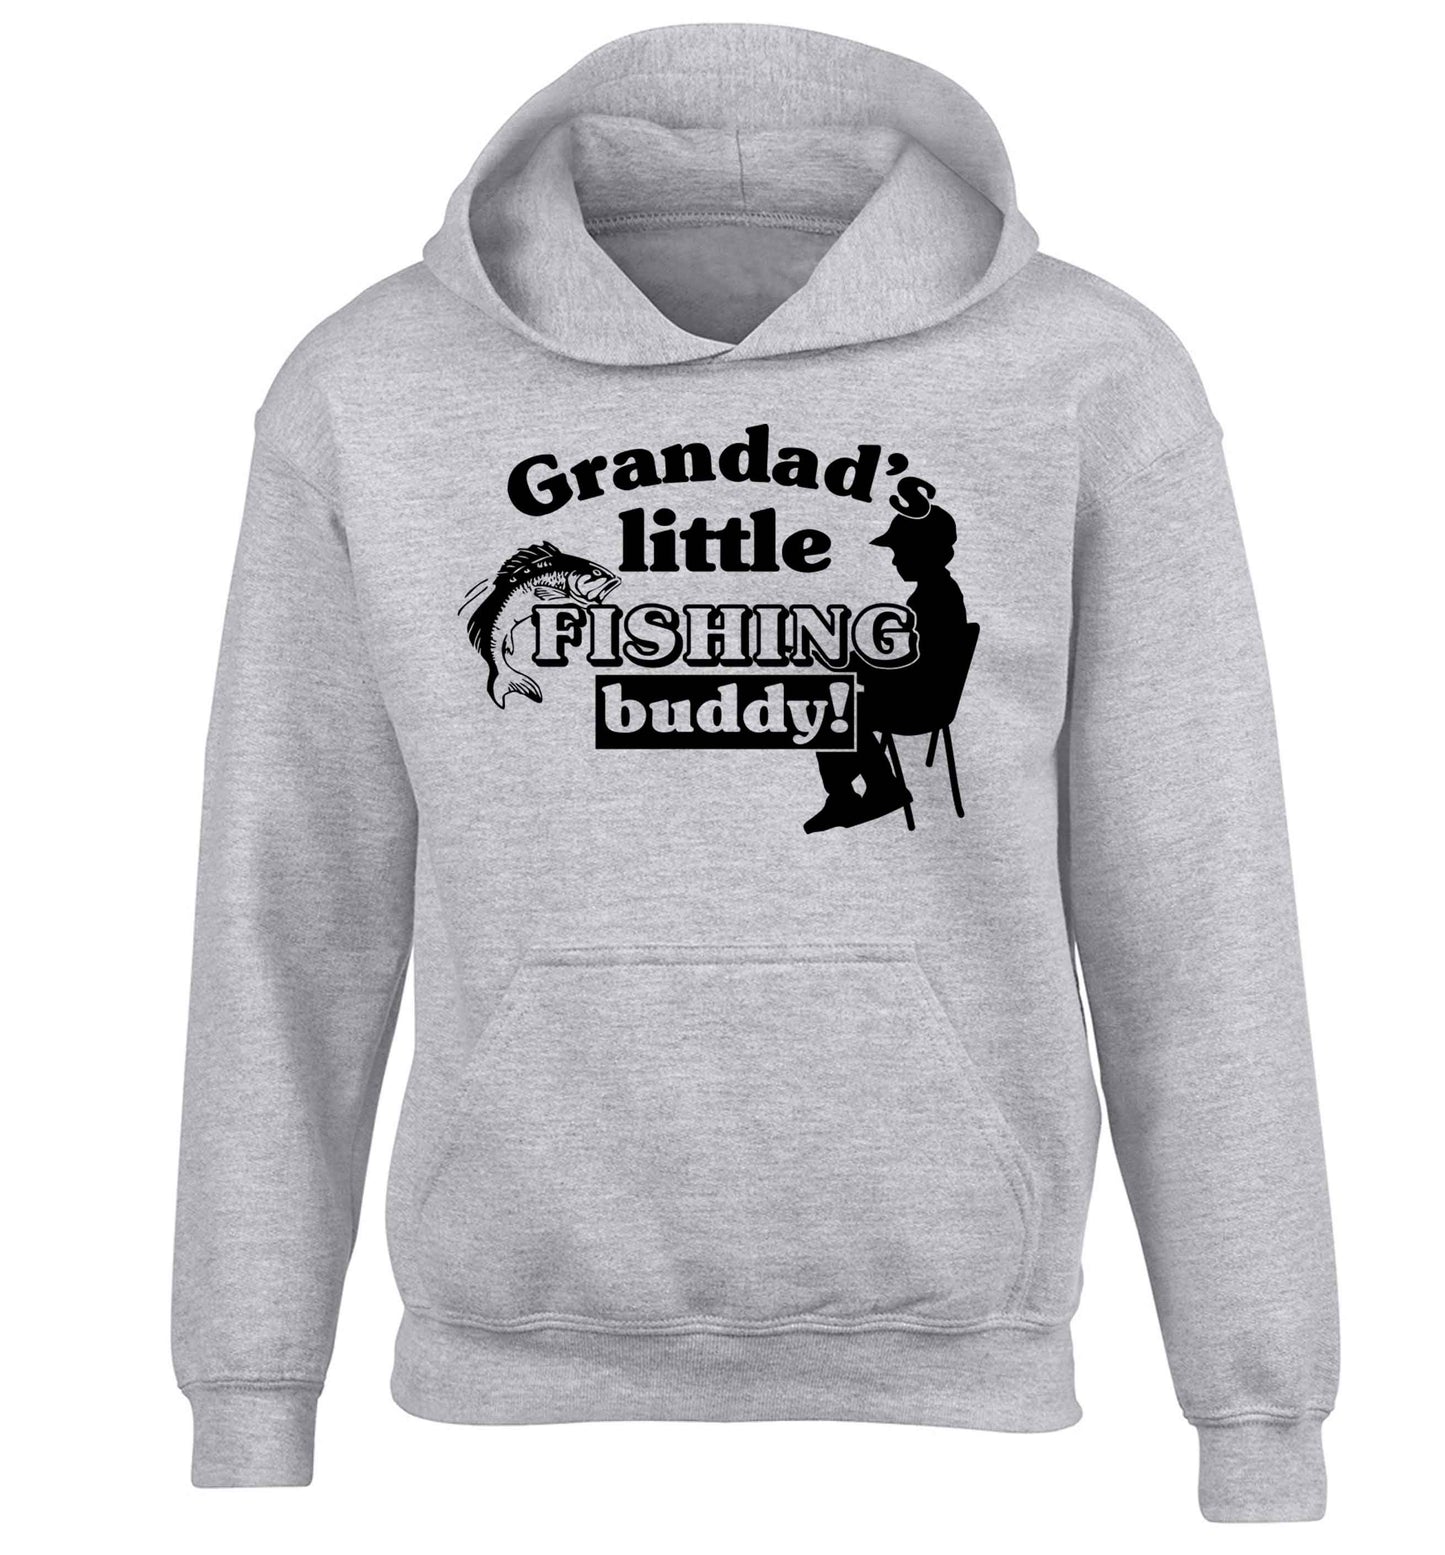 Grandad's little fishing buddy! children's grey hoodie 12-13 Years